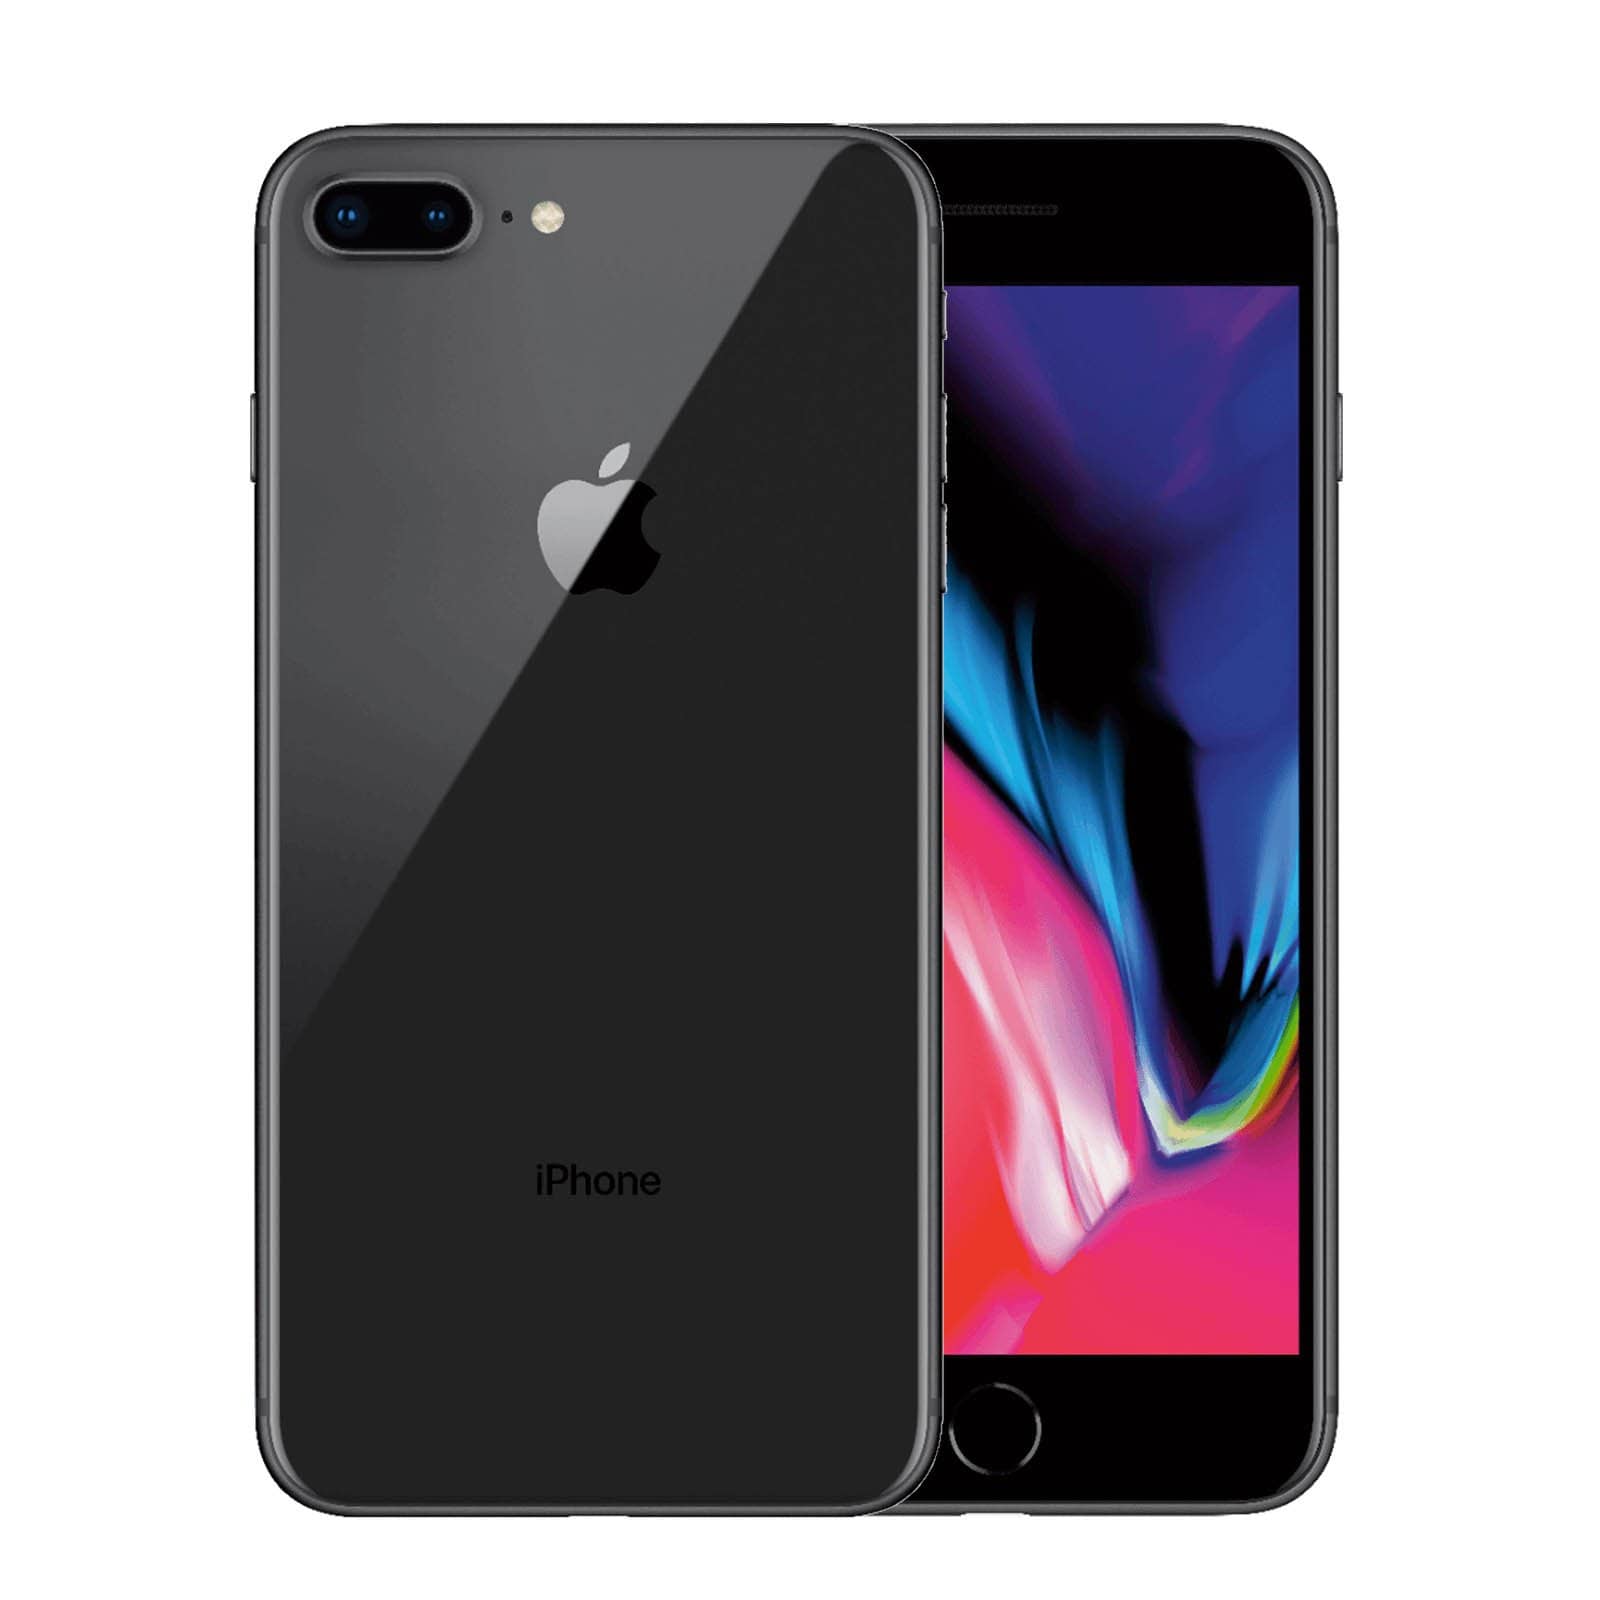 Apple iPhone 8 Plus 256GB Space Grey Fair - Unlocked 256GB Space Grey Fair